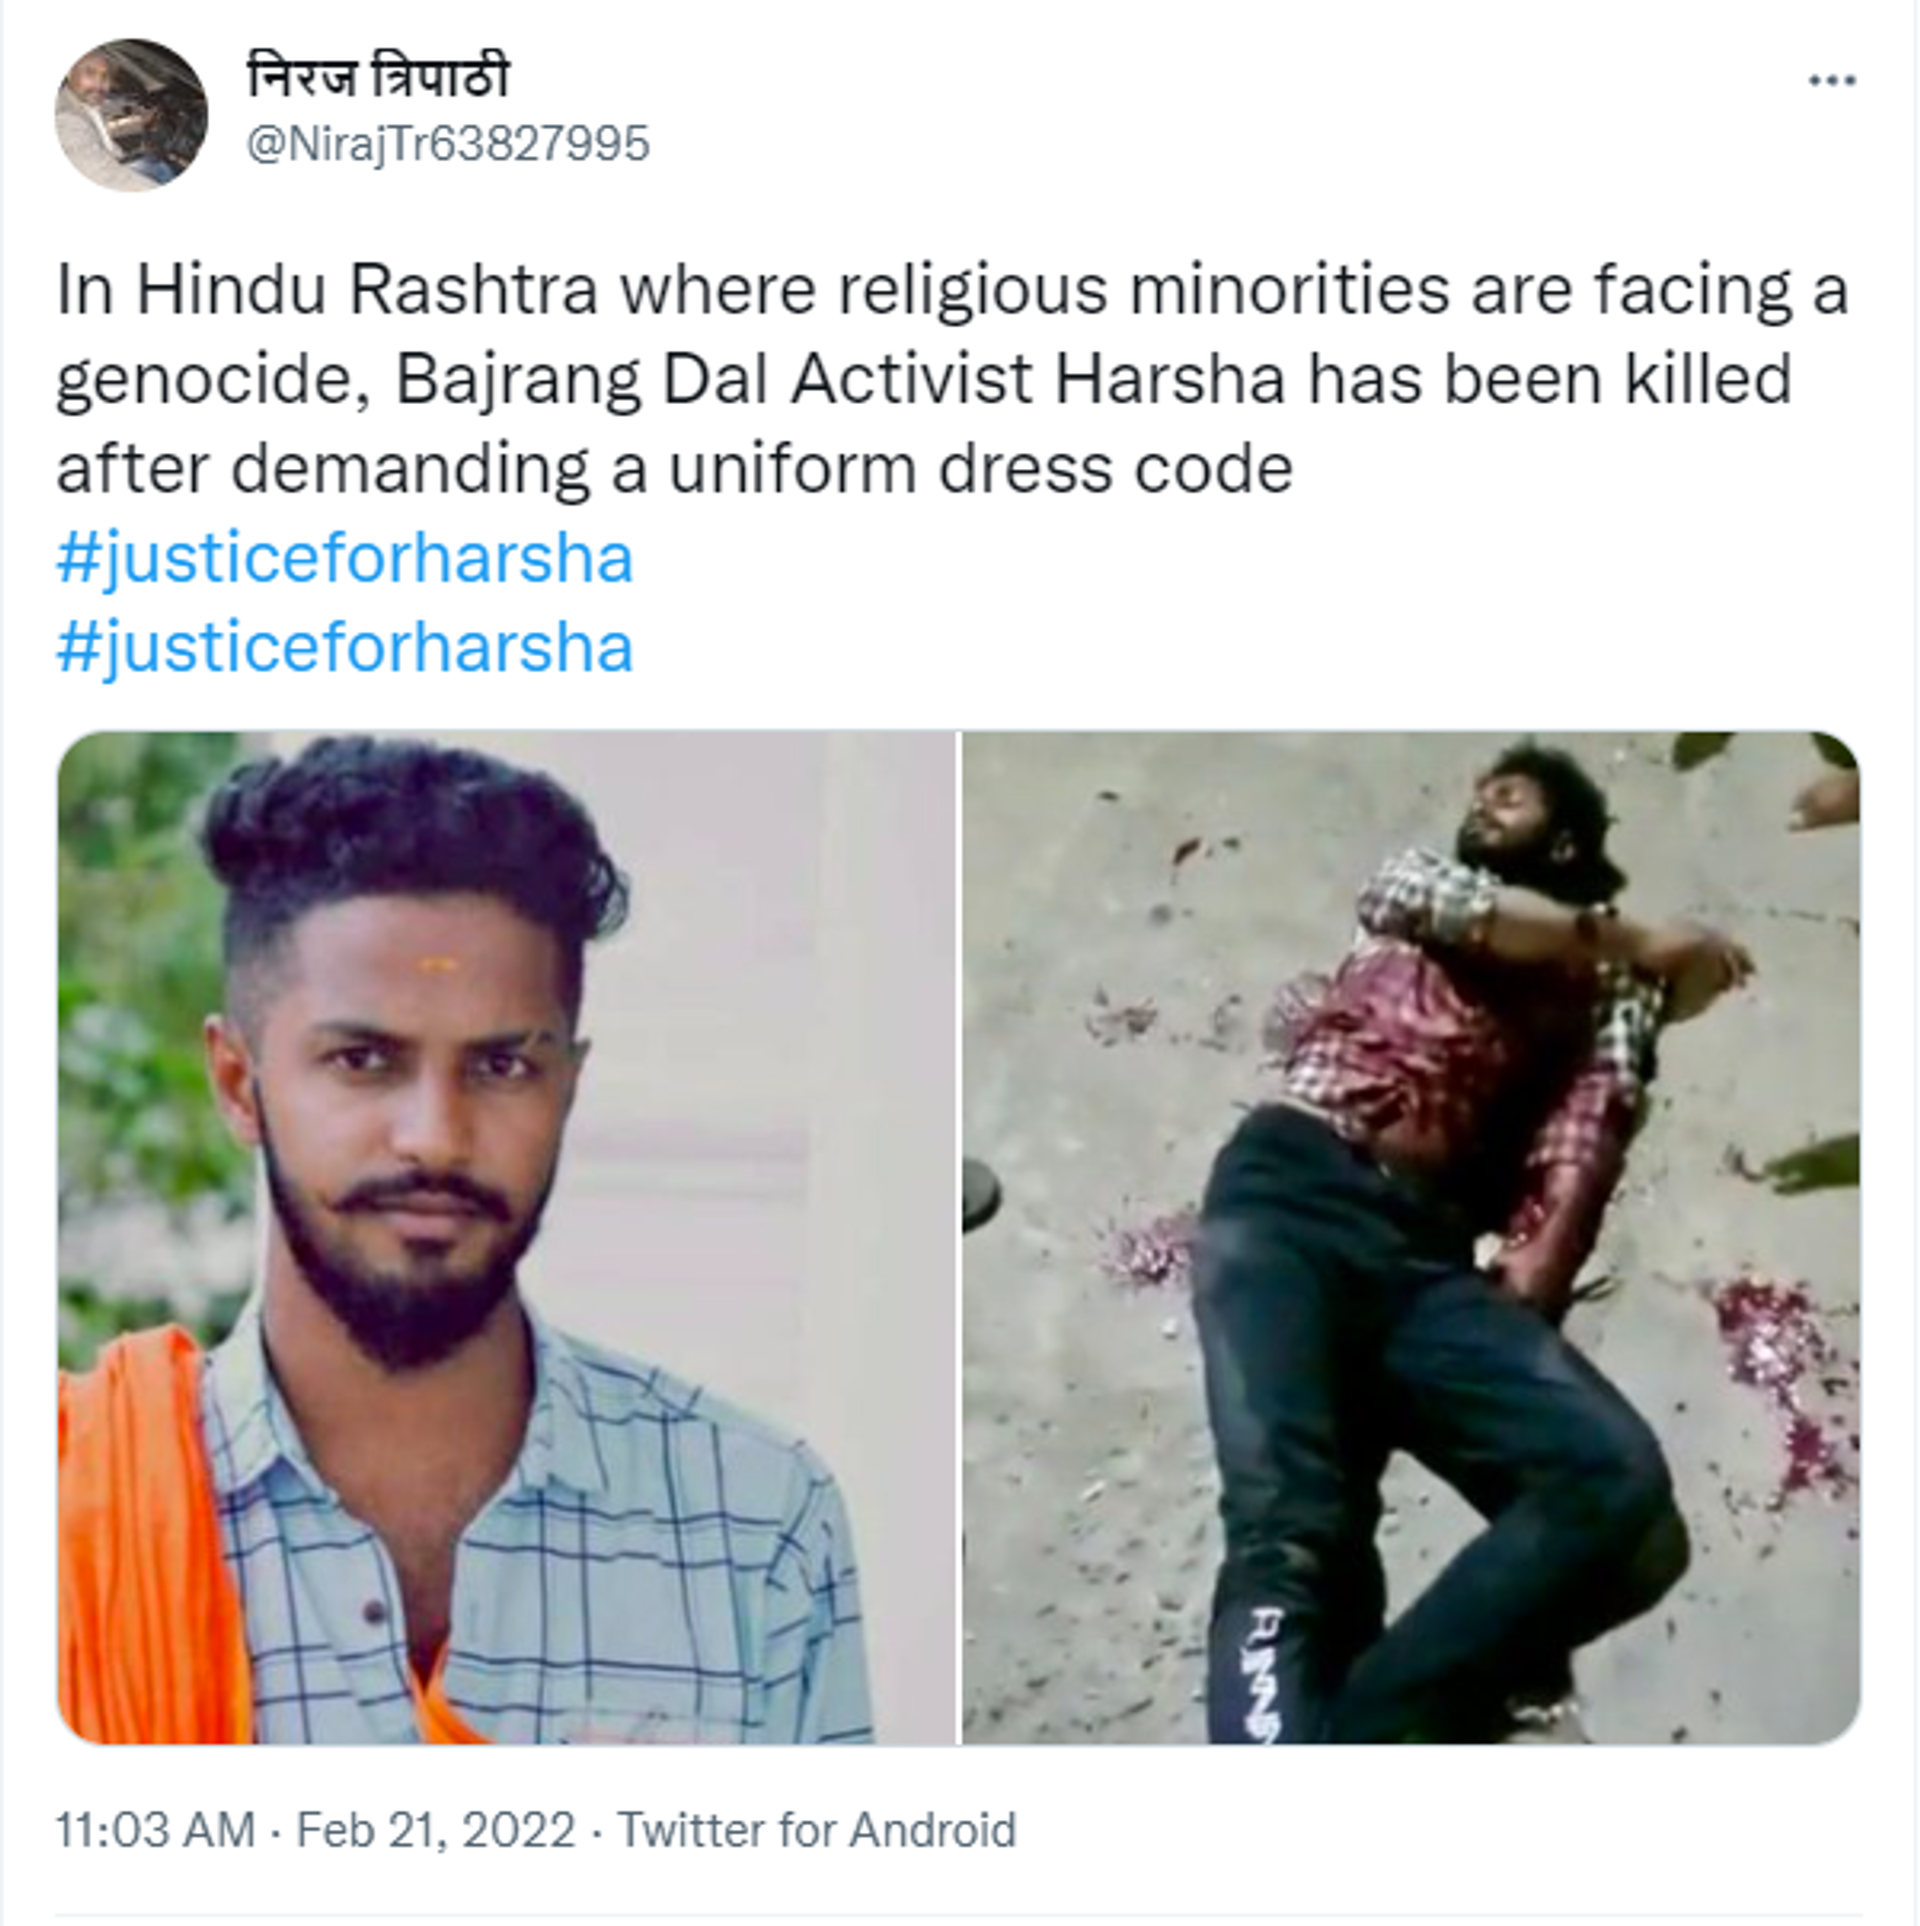 A Social Media User Claims That Harsha has been Killed for Demanding Uniform Dress Code - Sputnik International, 1920, 21.02.2022